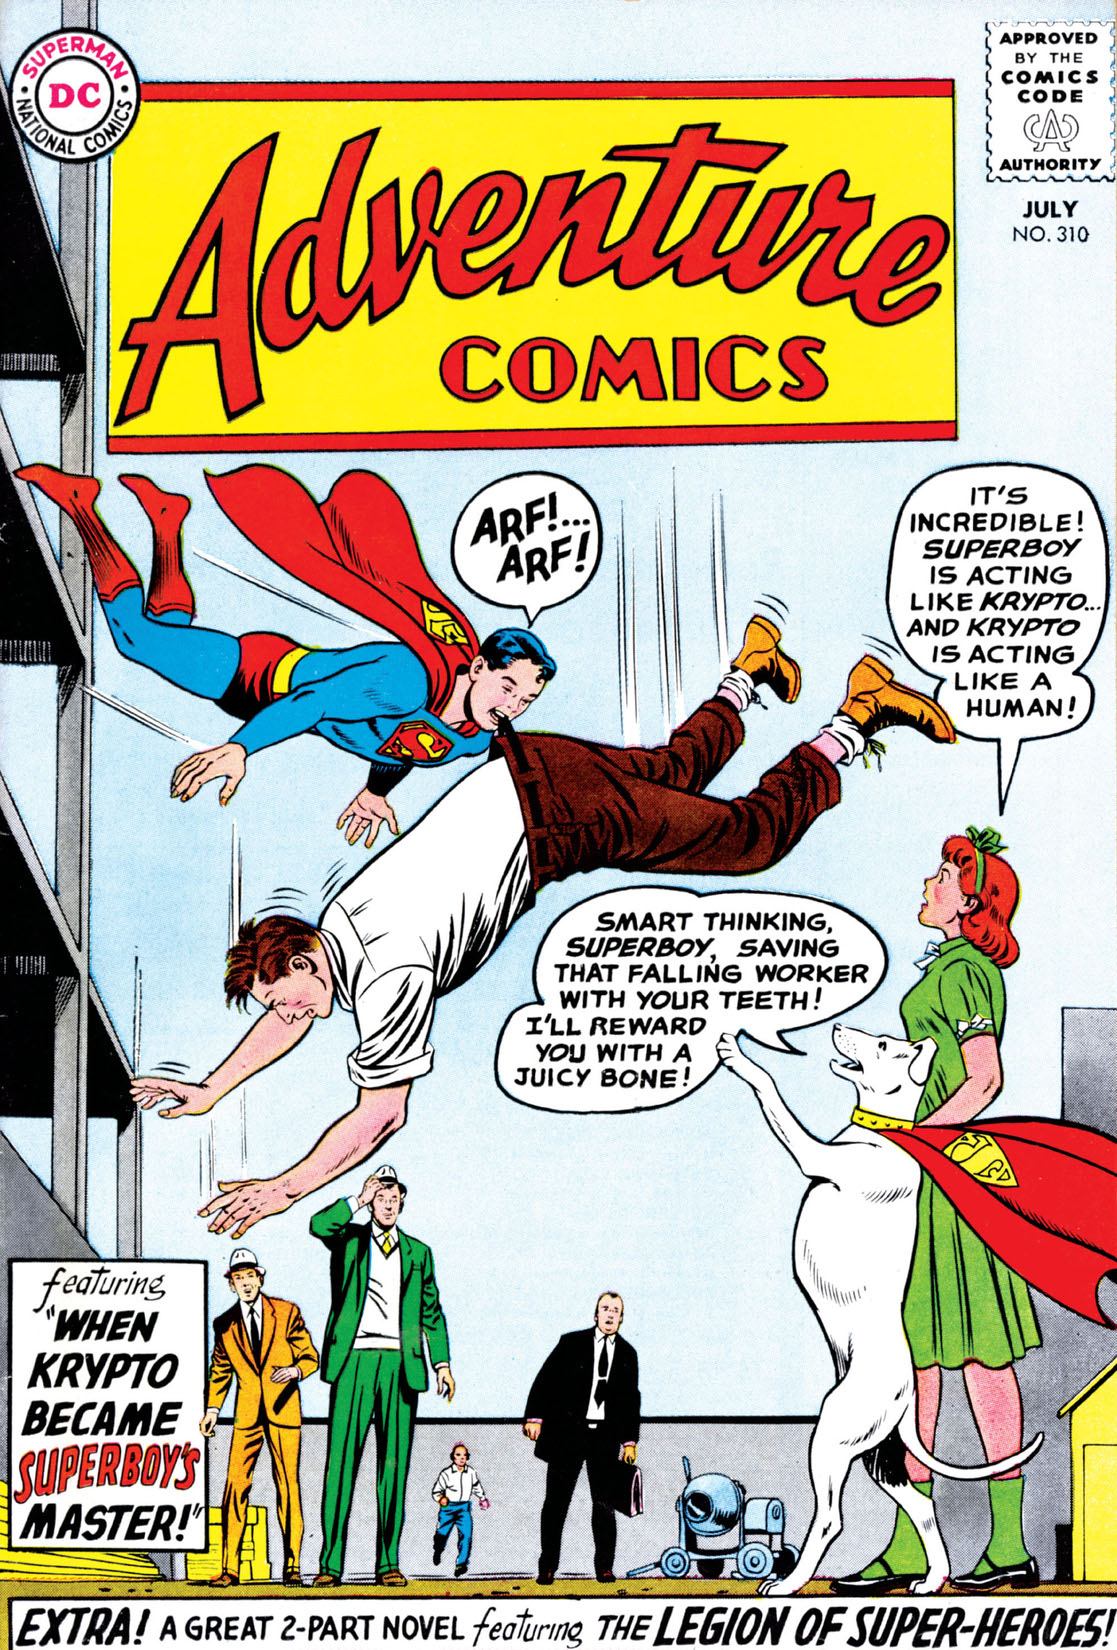 Adventure Comics (1938-) #310 preview images